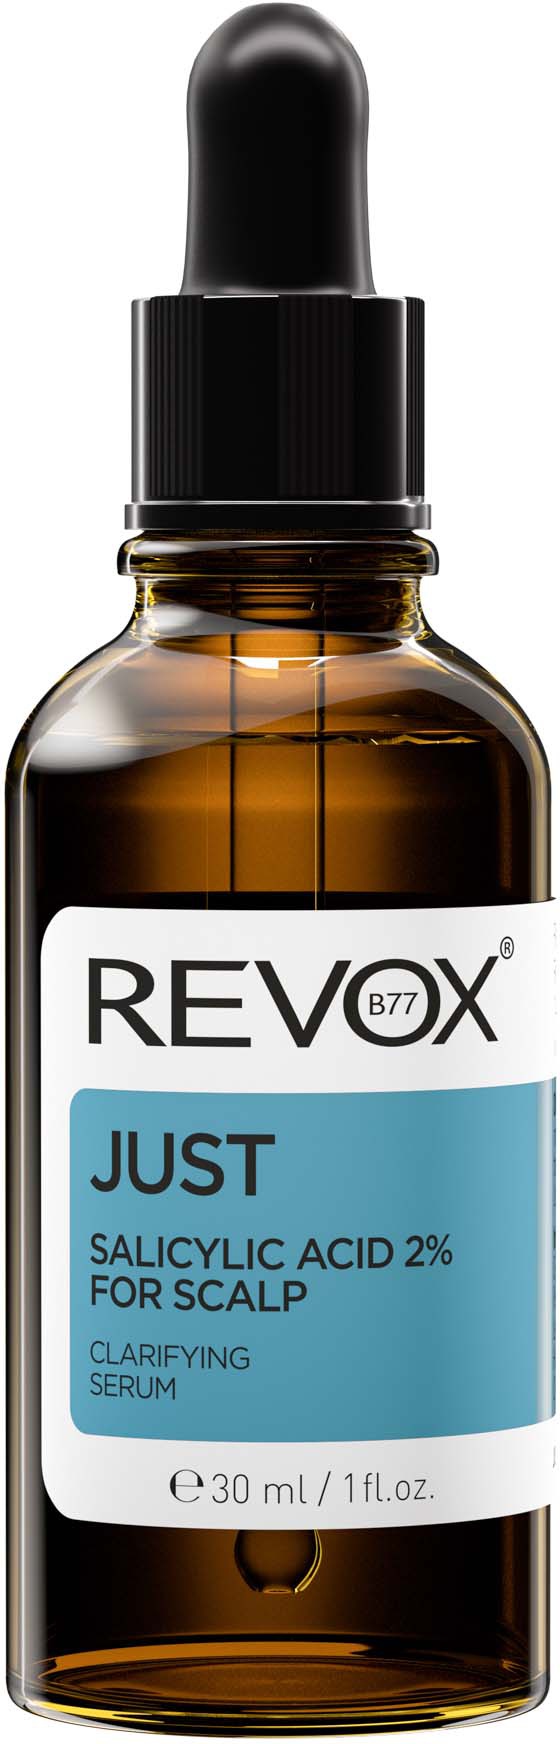 Revox Just Salicylic Acid 2% For Scalp